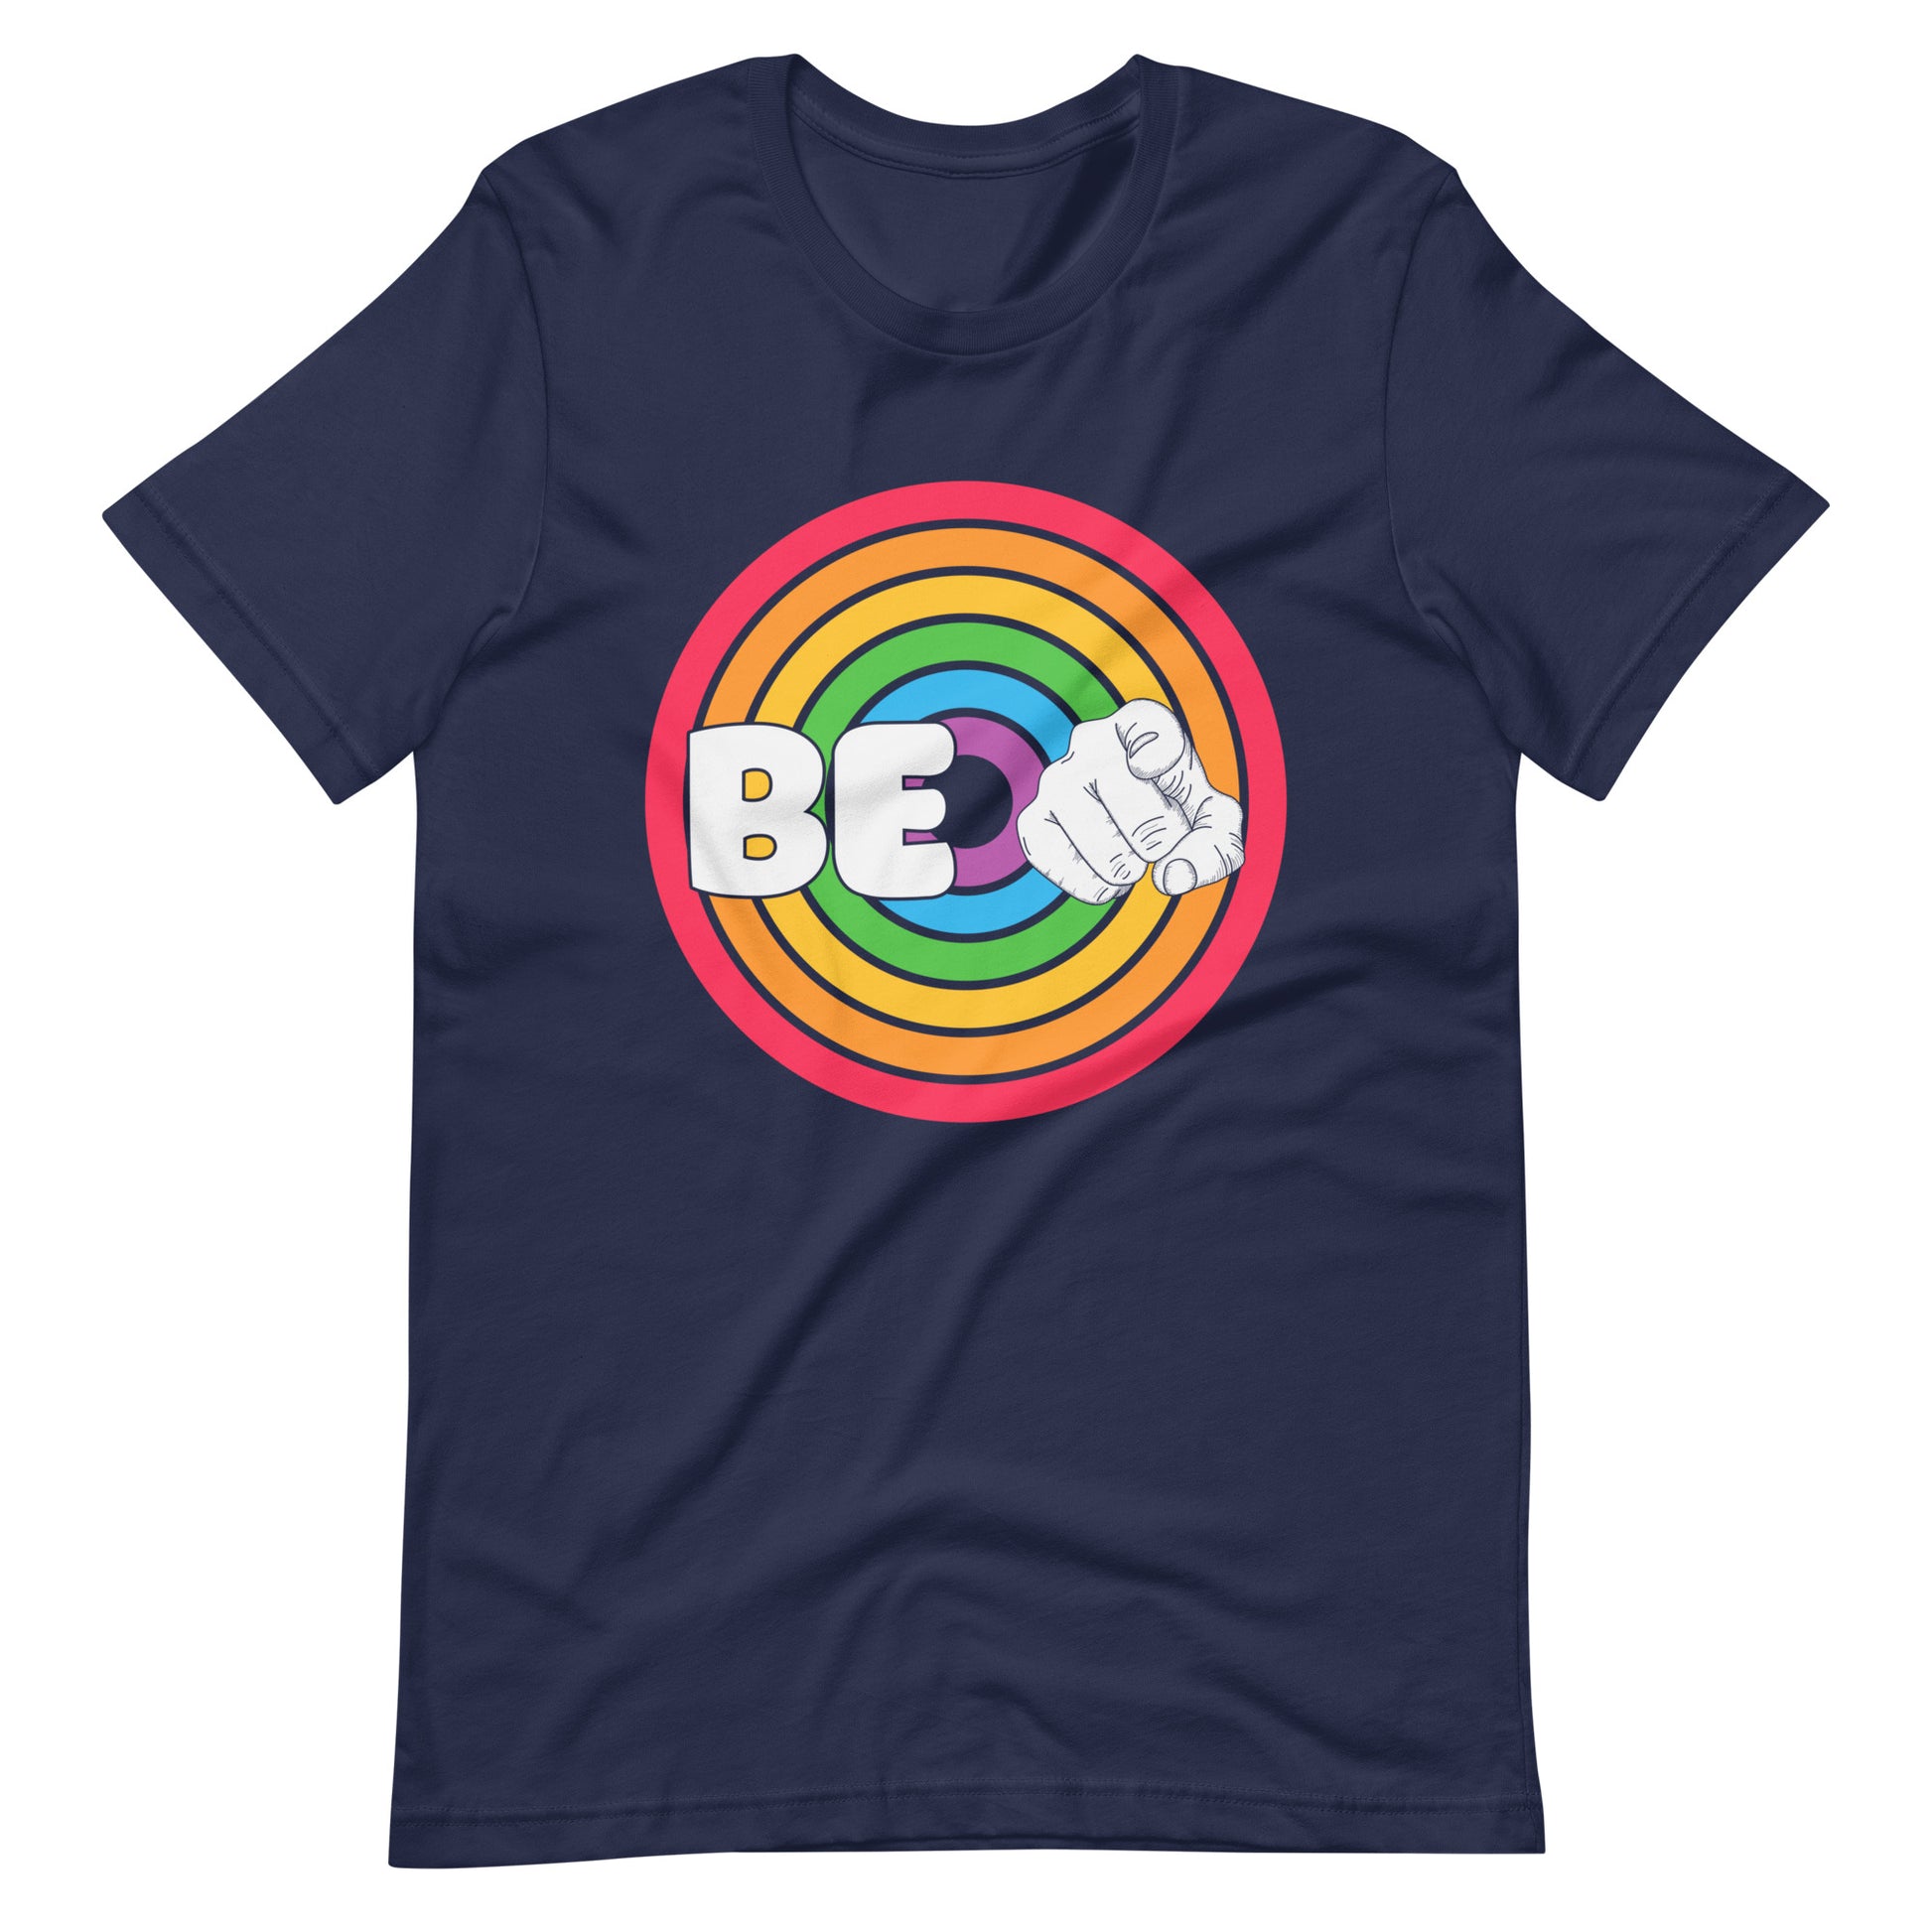 Be You Pride T-Shirt - gay pride apparel